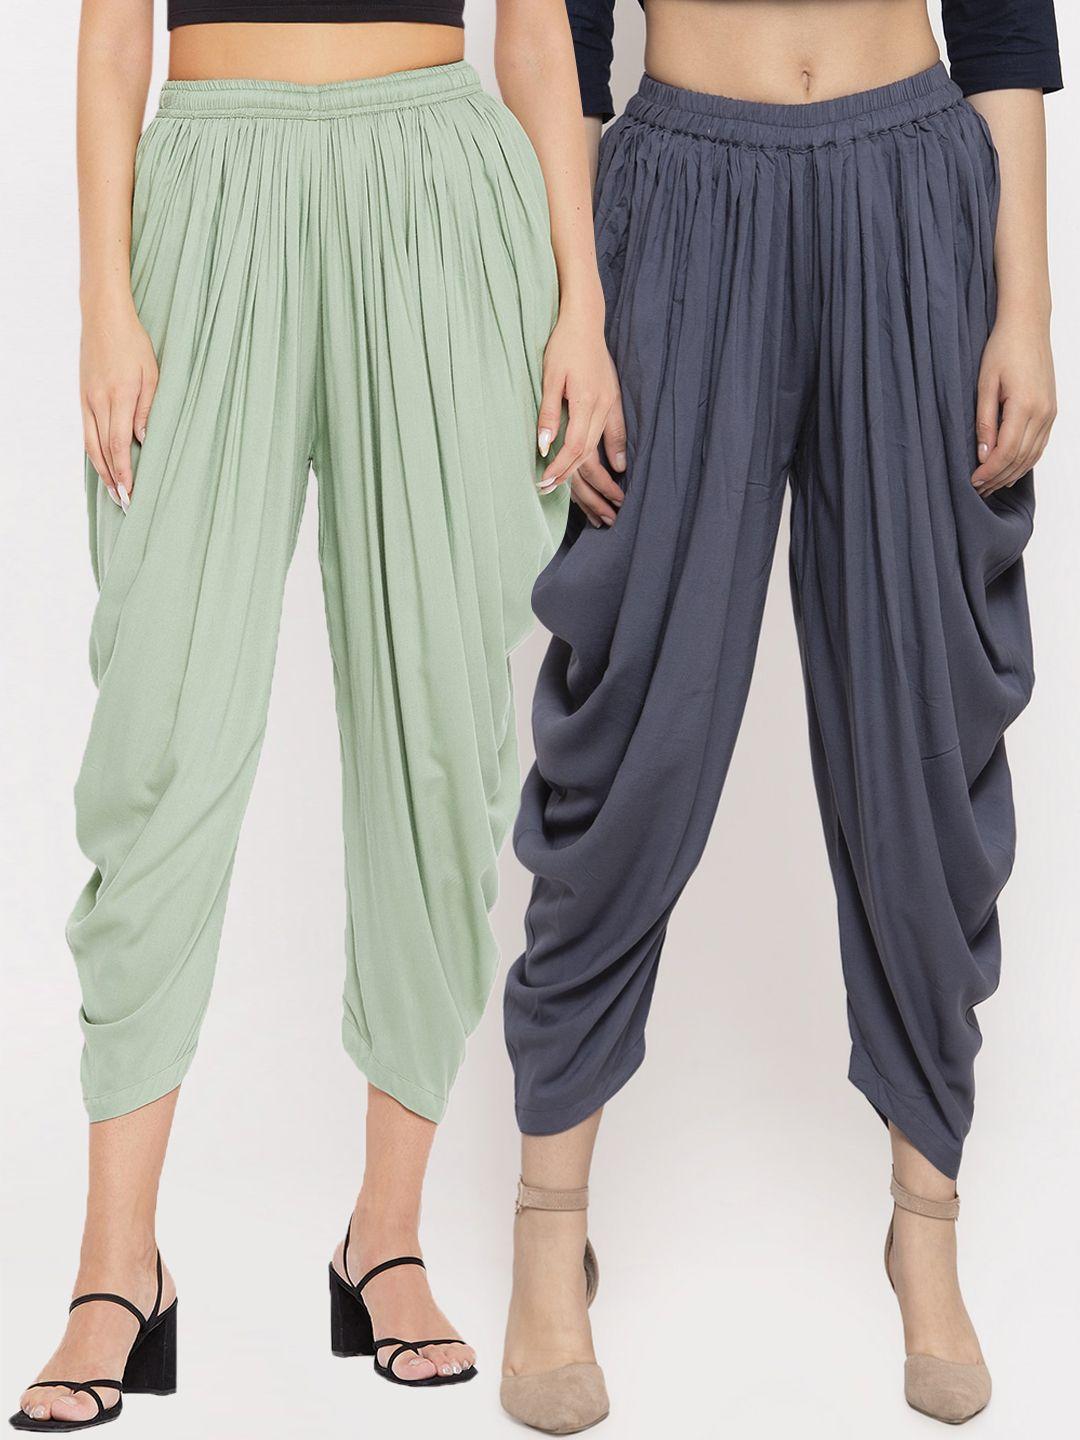 clora creation women pack of 2 grey & sea green solid dhoti pants